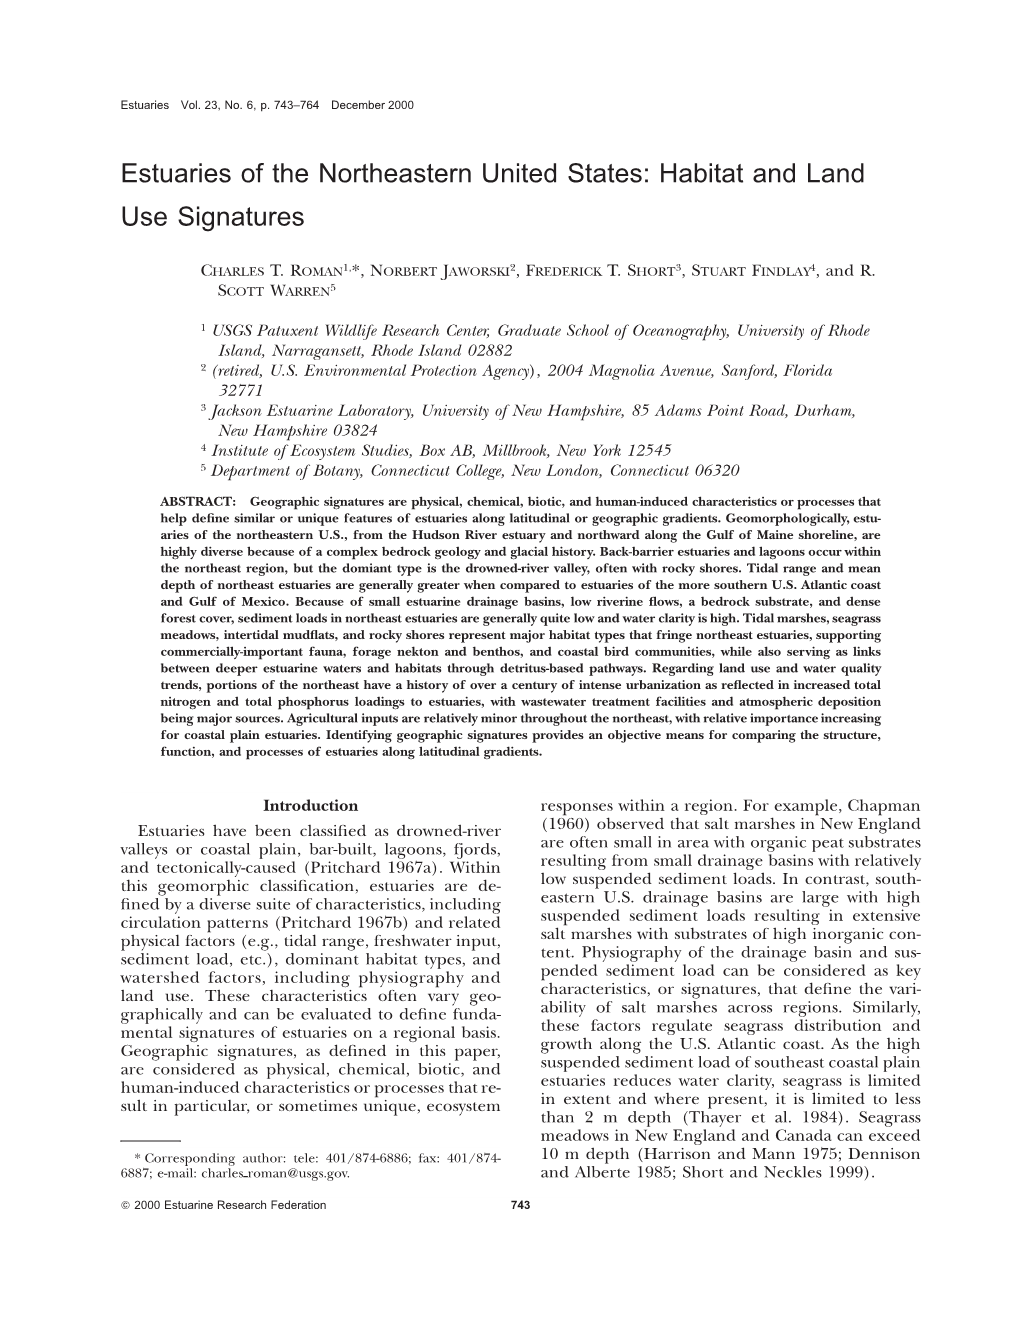 Estuaries of the Northeastern United States: Habitat and Land Use Signatures